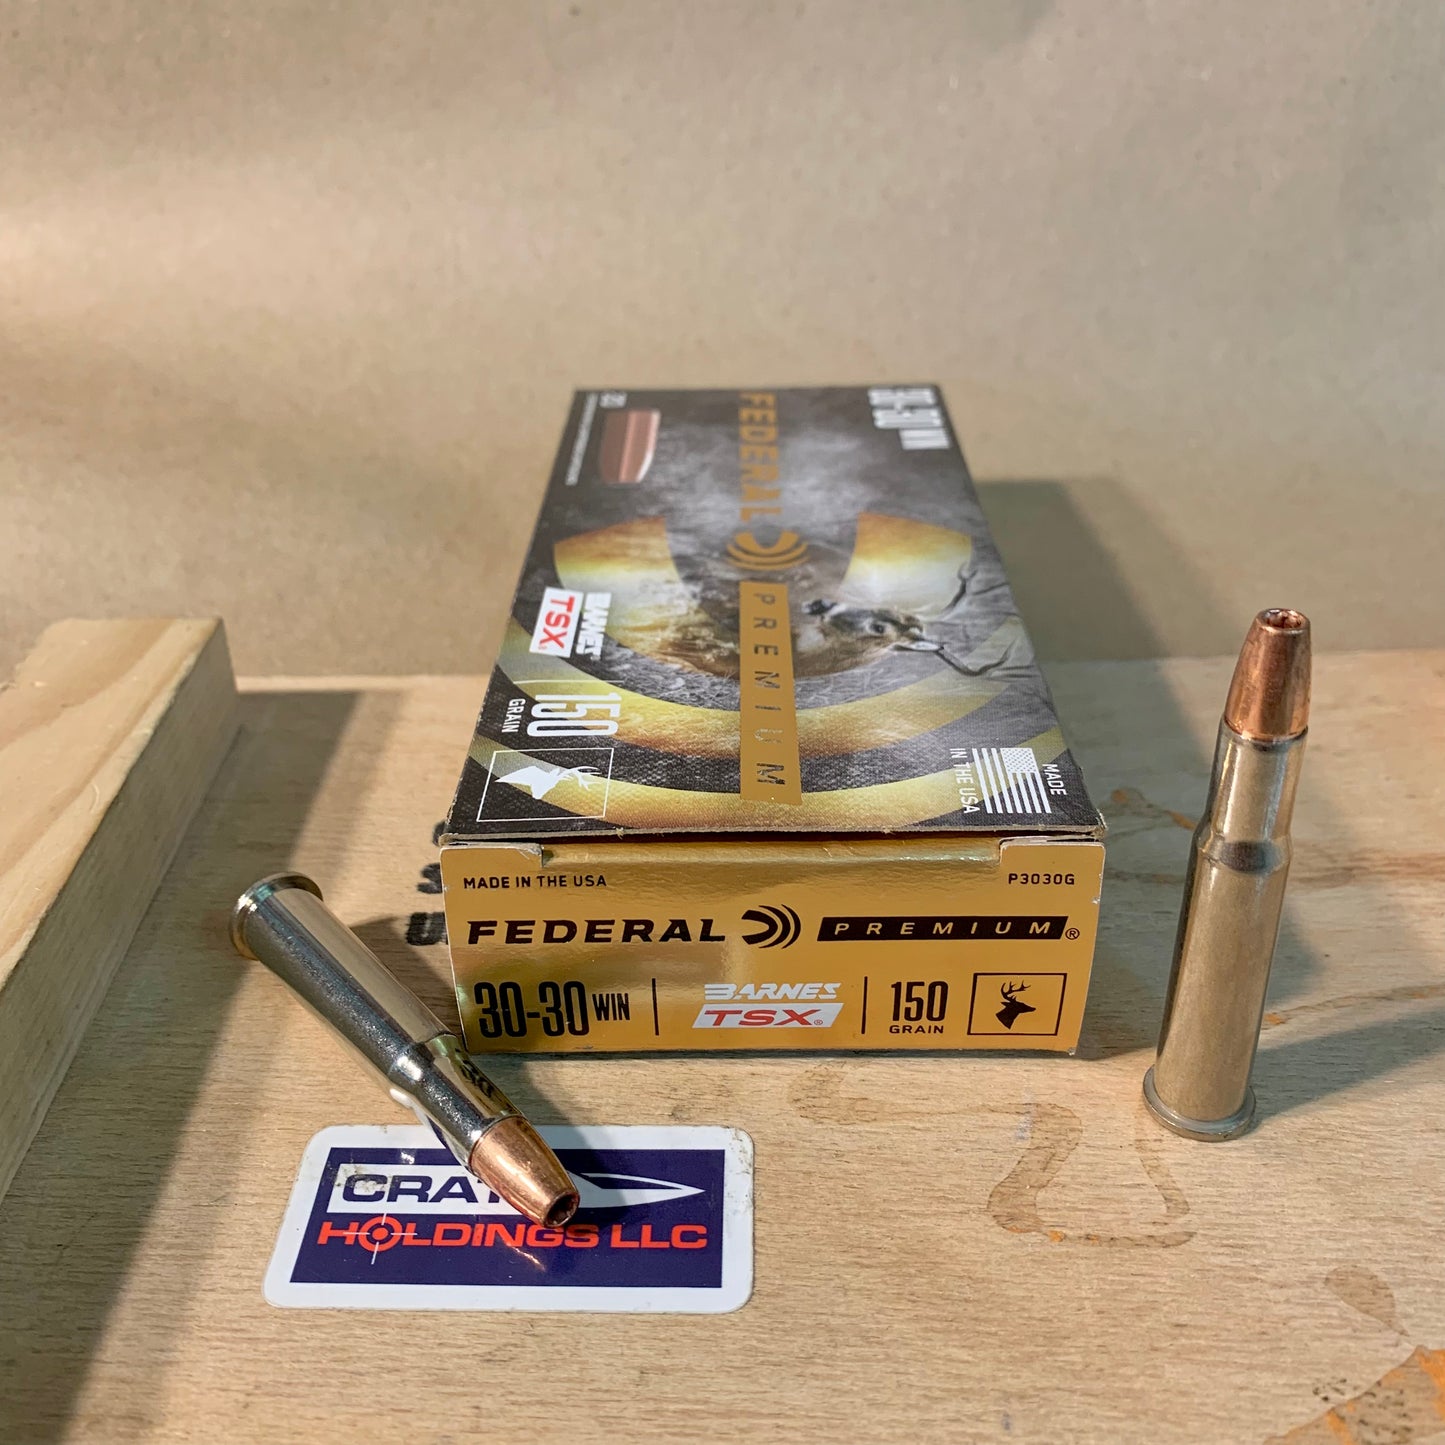 20 Round Box Federal Premium 30-30 Win. Barnes TSX Ammo 150gr HP 2220 FPS - P3030G